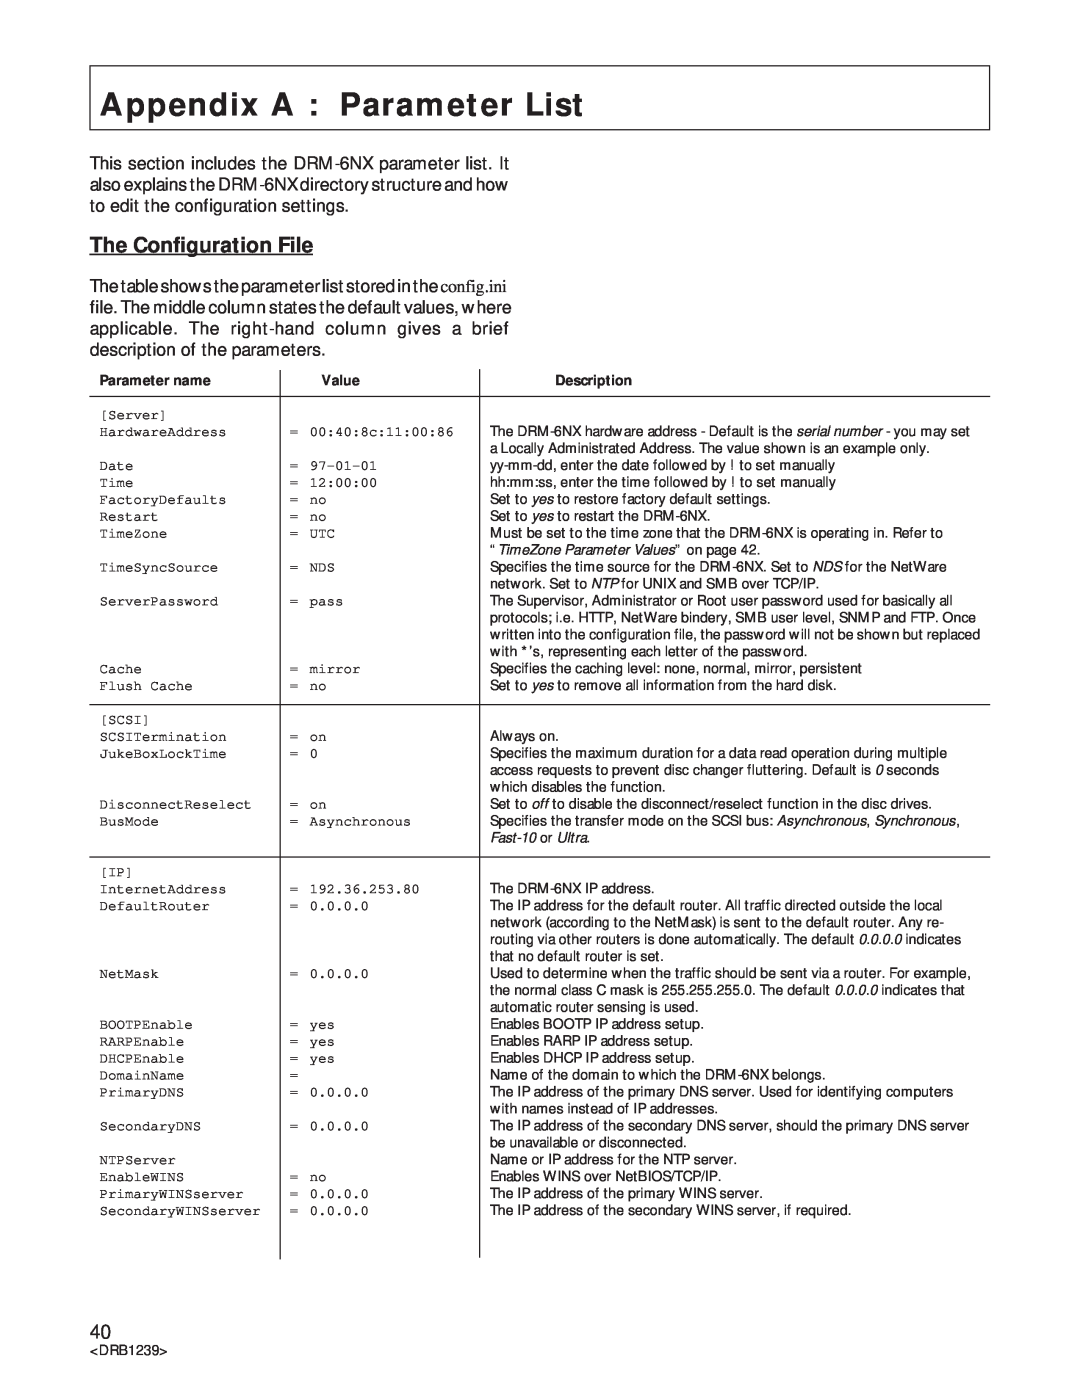 Pioneer DRM-6NX manual Appendix A Parameter List, The Configuration File 